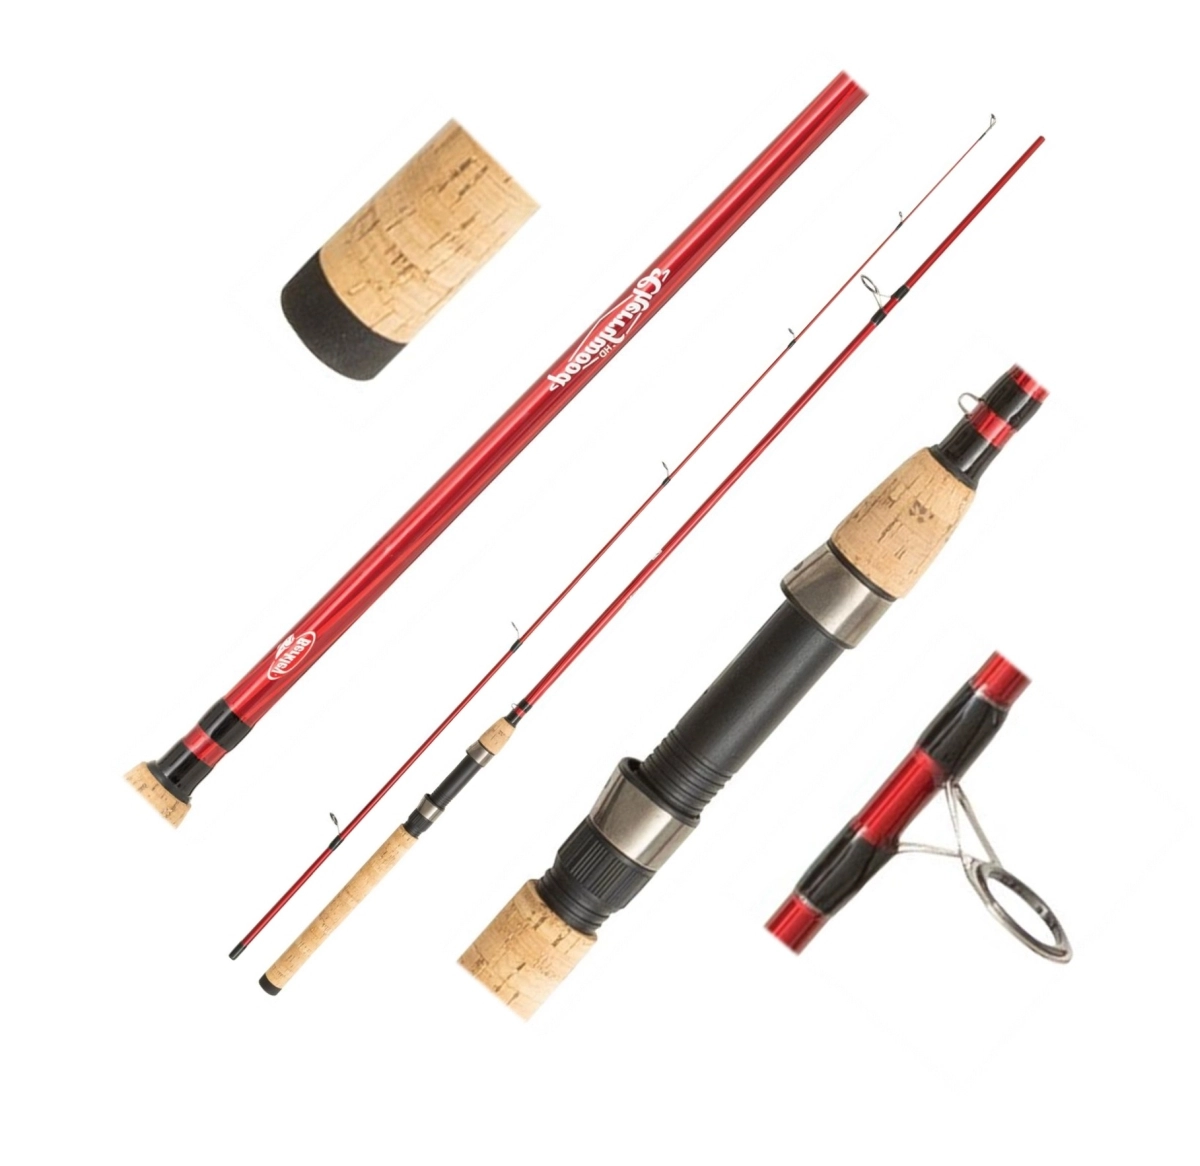 Berkley Cherrywood HD 242 - Fishing Rod